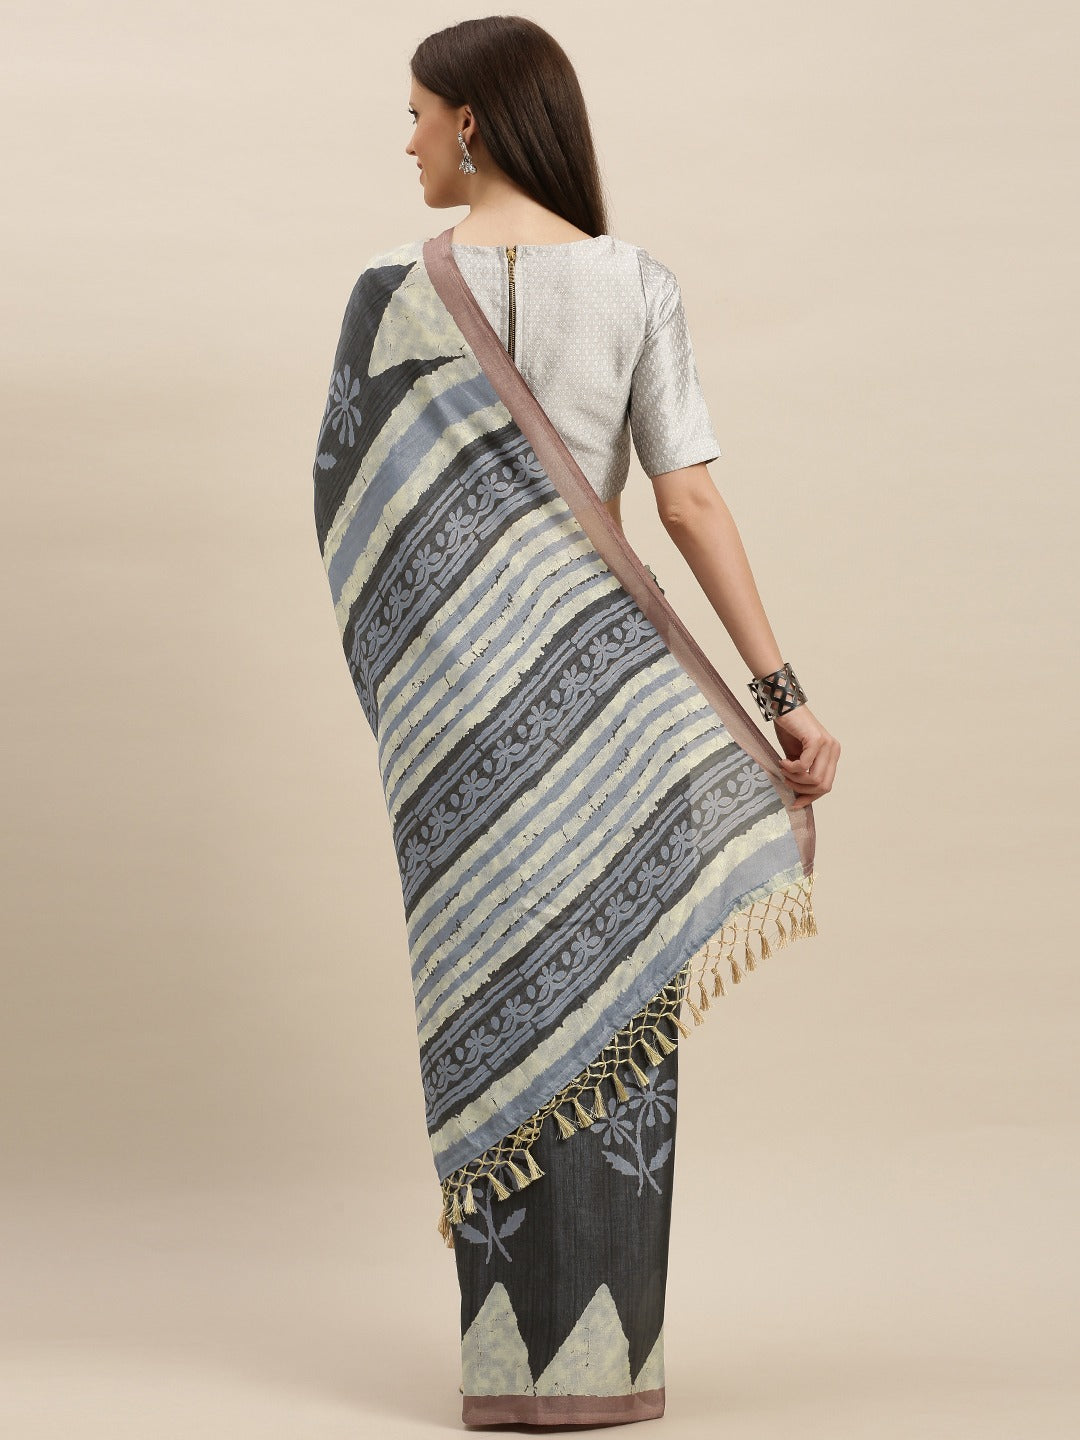  Charcoal Grey & Off-White Colour Bagru Printed Linen Saree